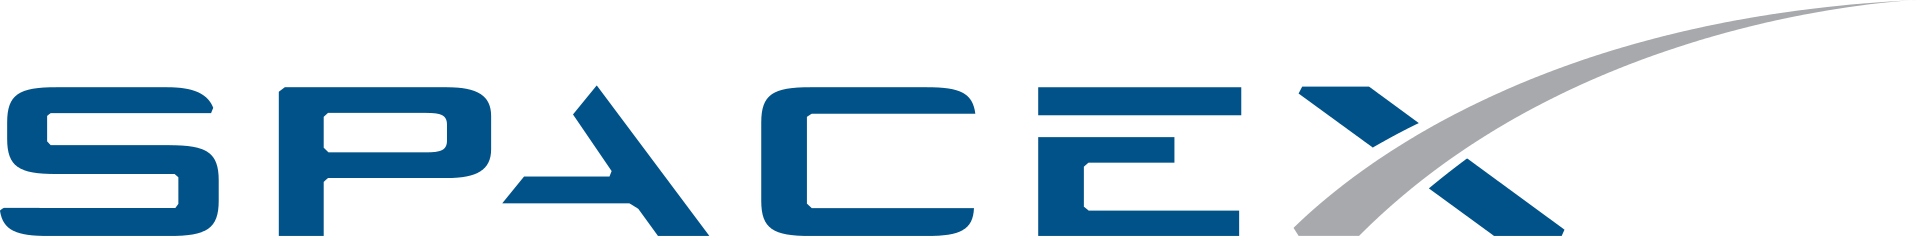 Space x logo